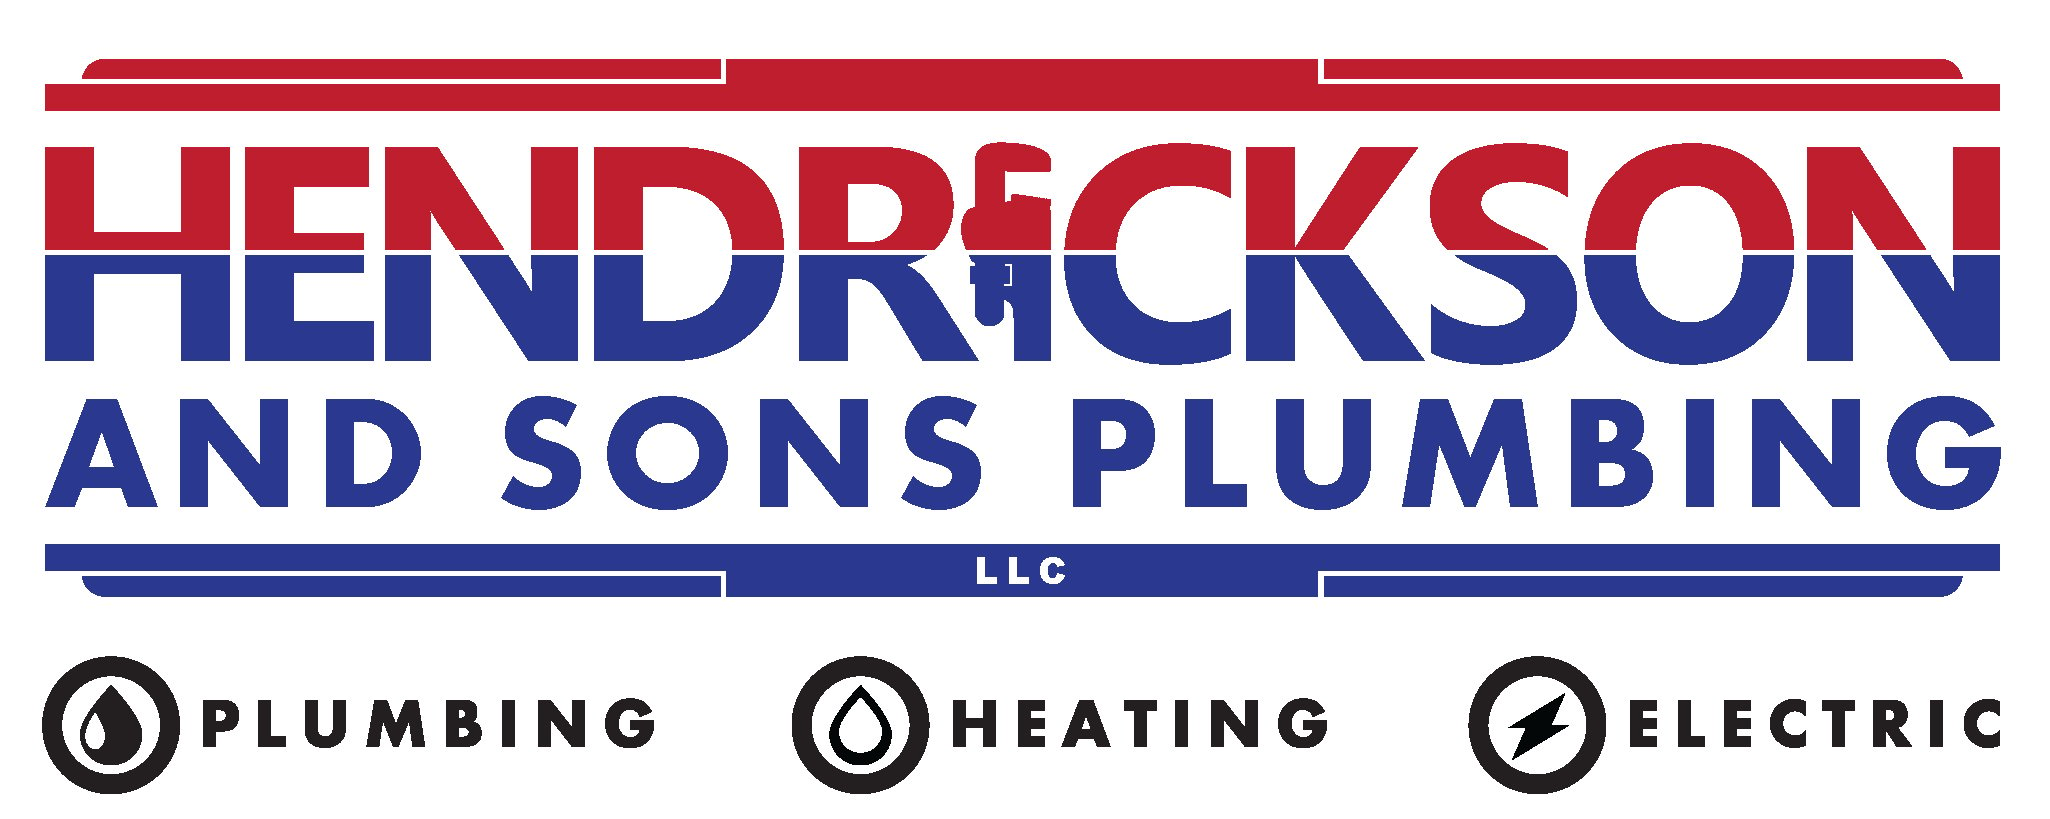 Hendrickson and Son's Plumbing, LLC Logo